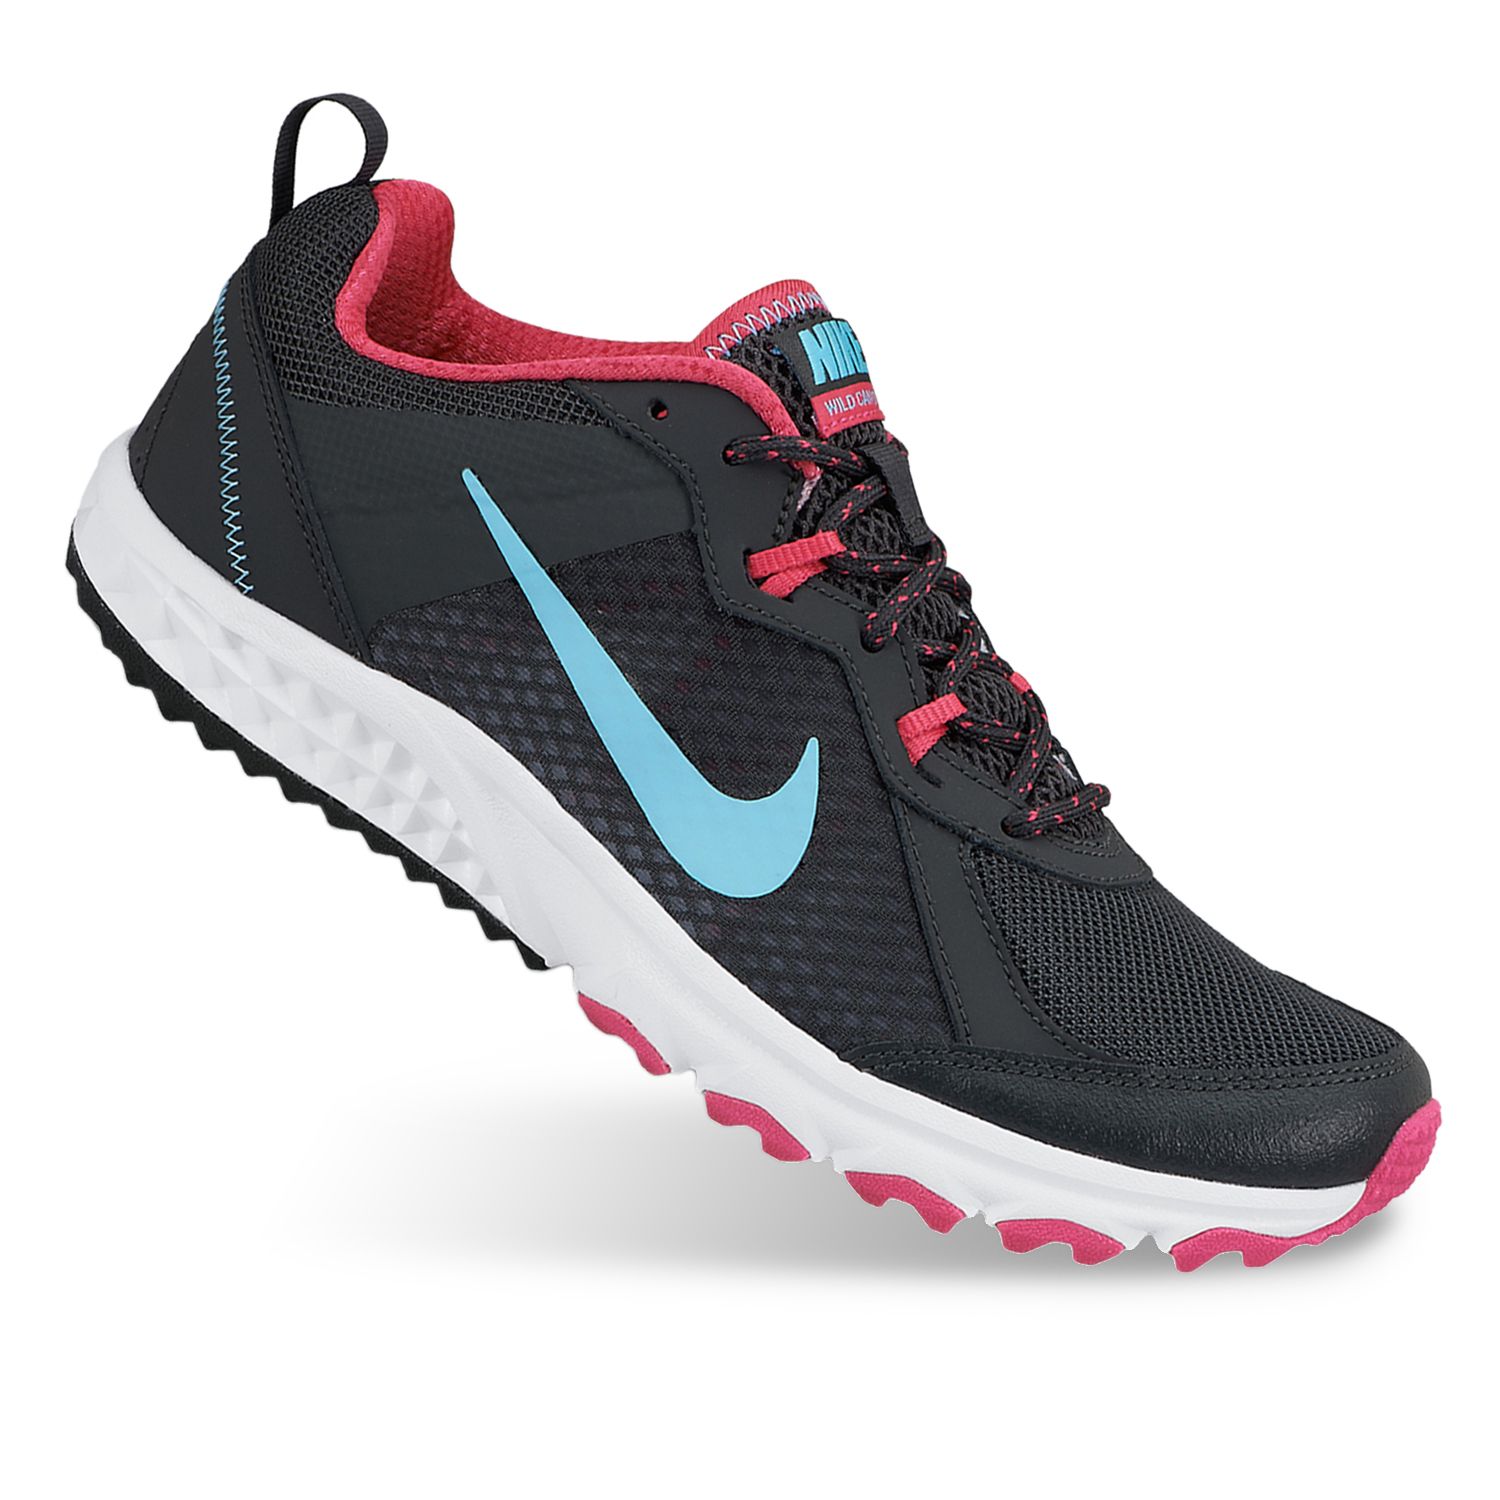 Nike Wild Trail Running Shoes - Women